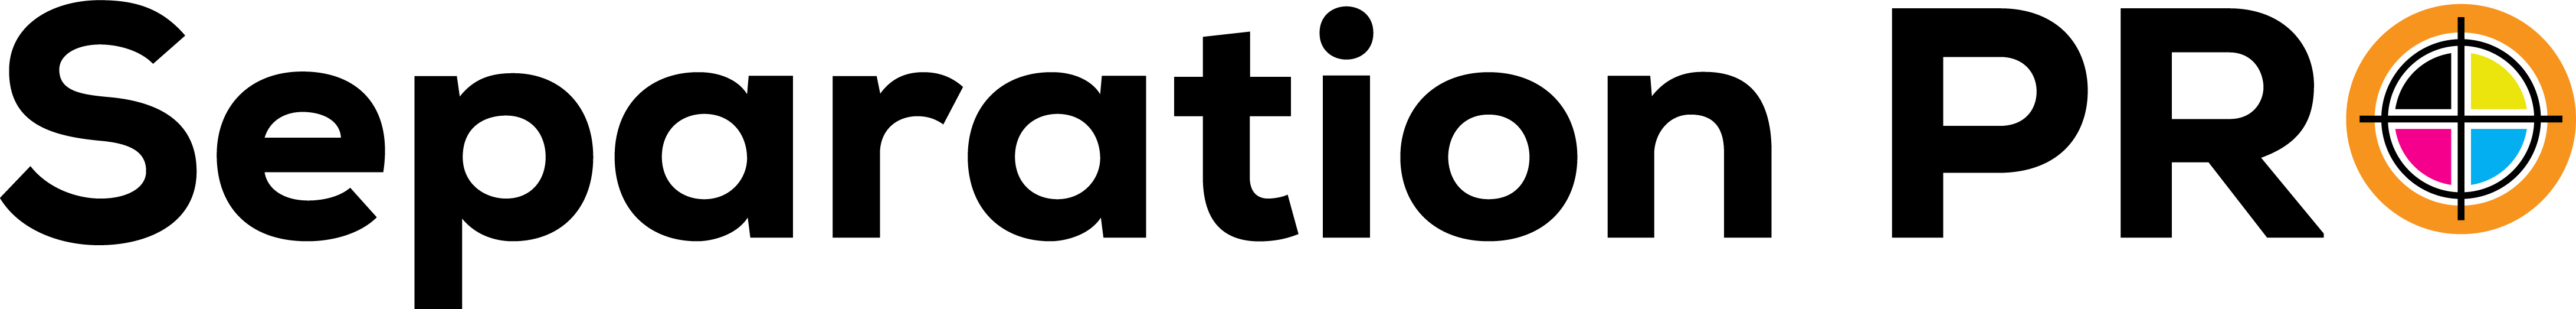 Separation PRO logo